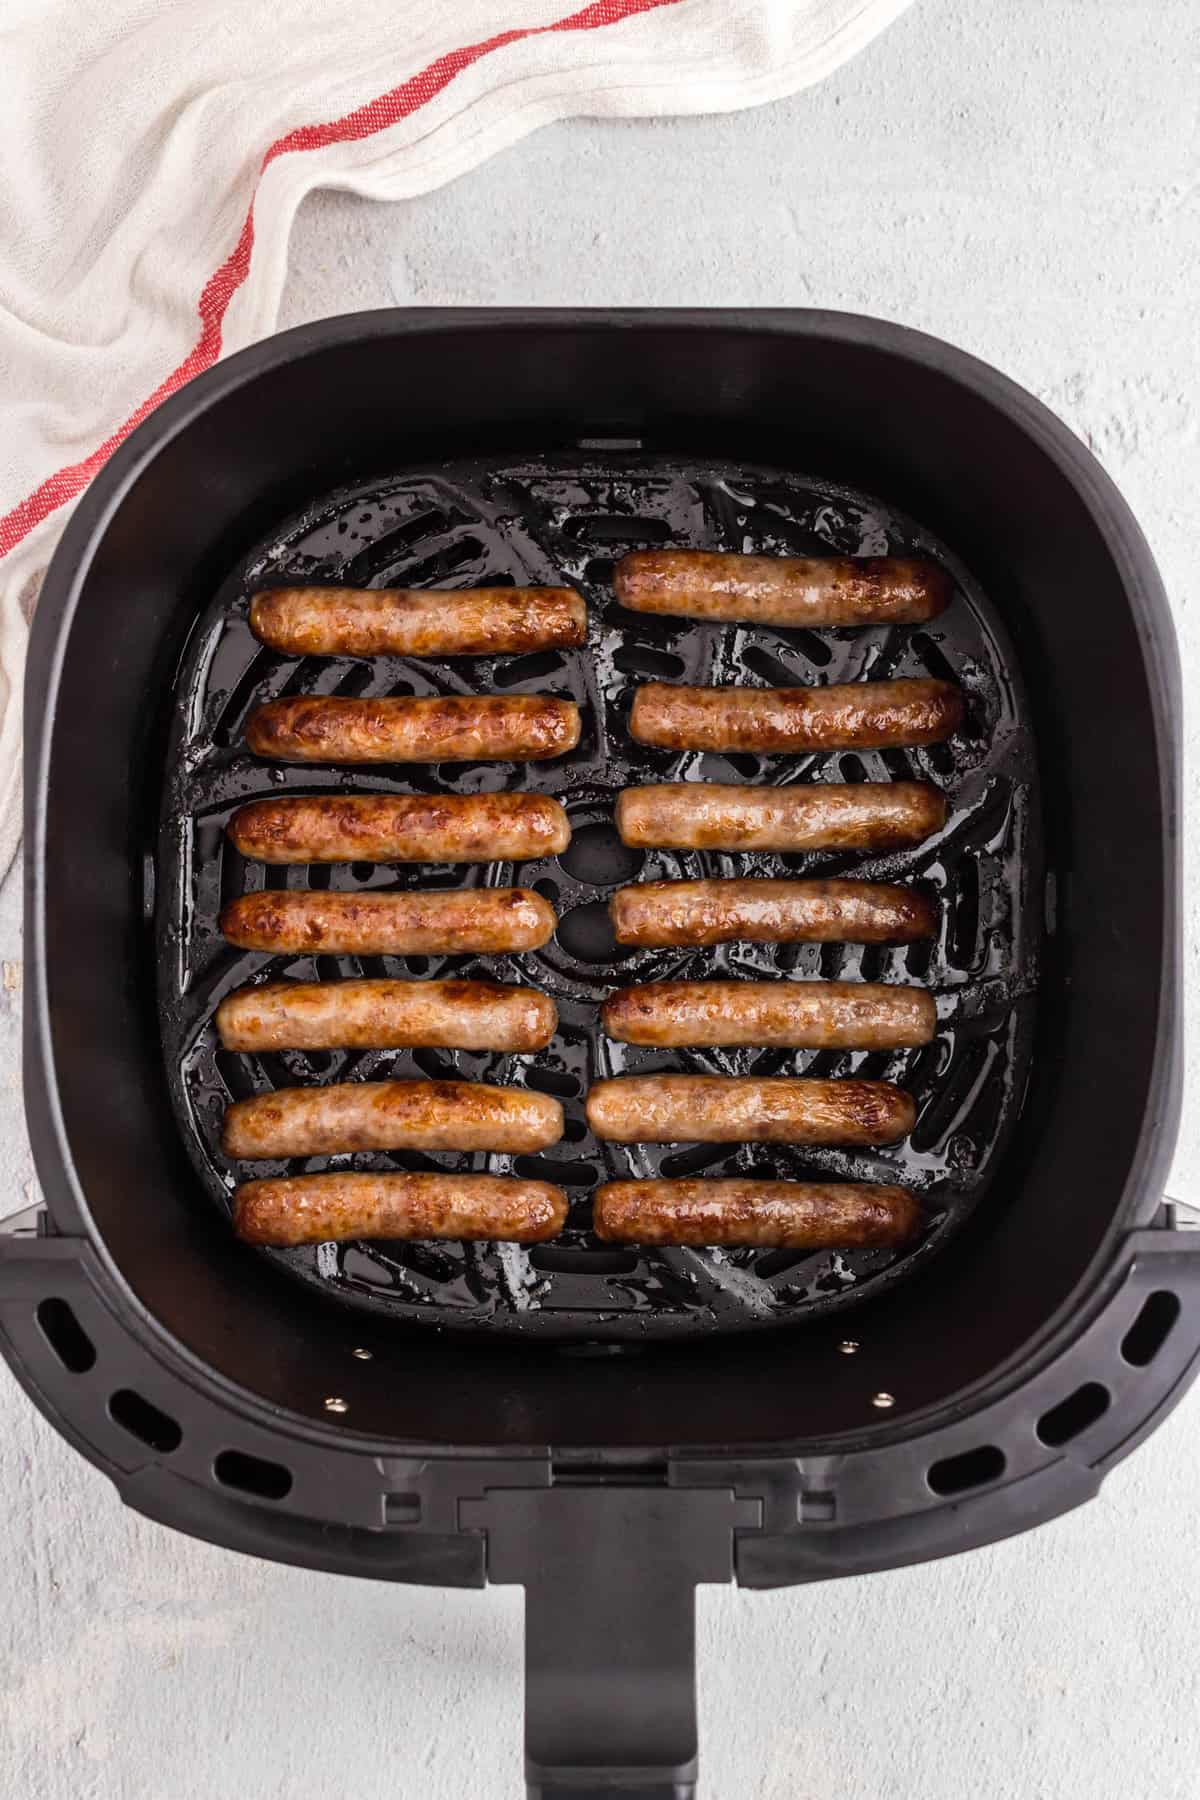 Cooked Breakfast Sausage in Air Fryer